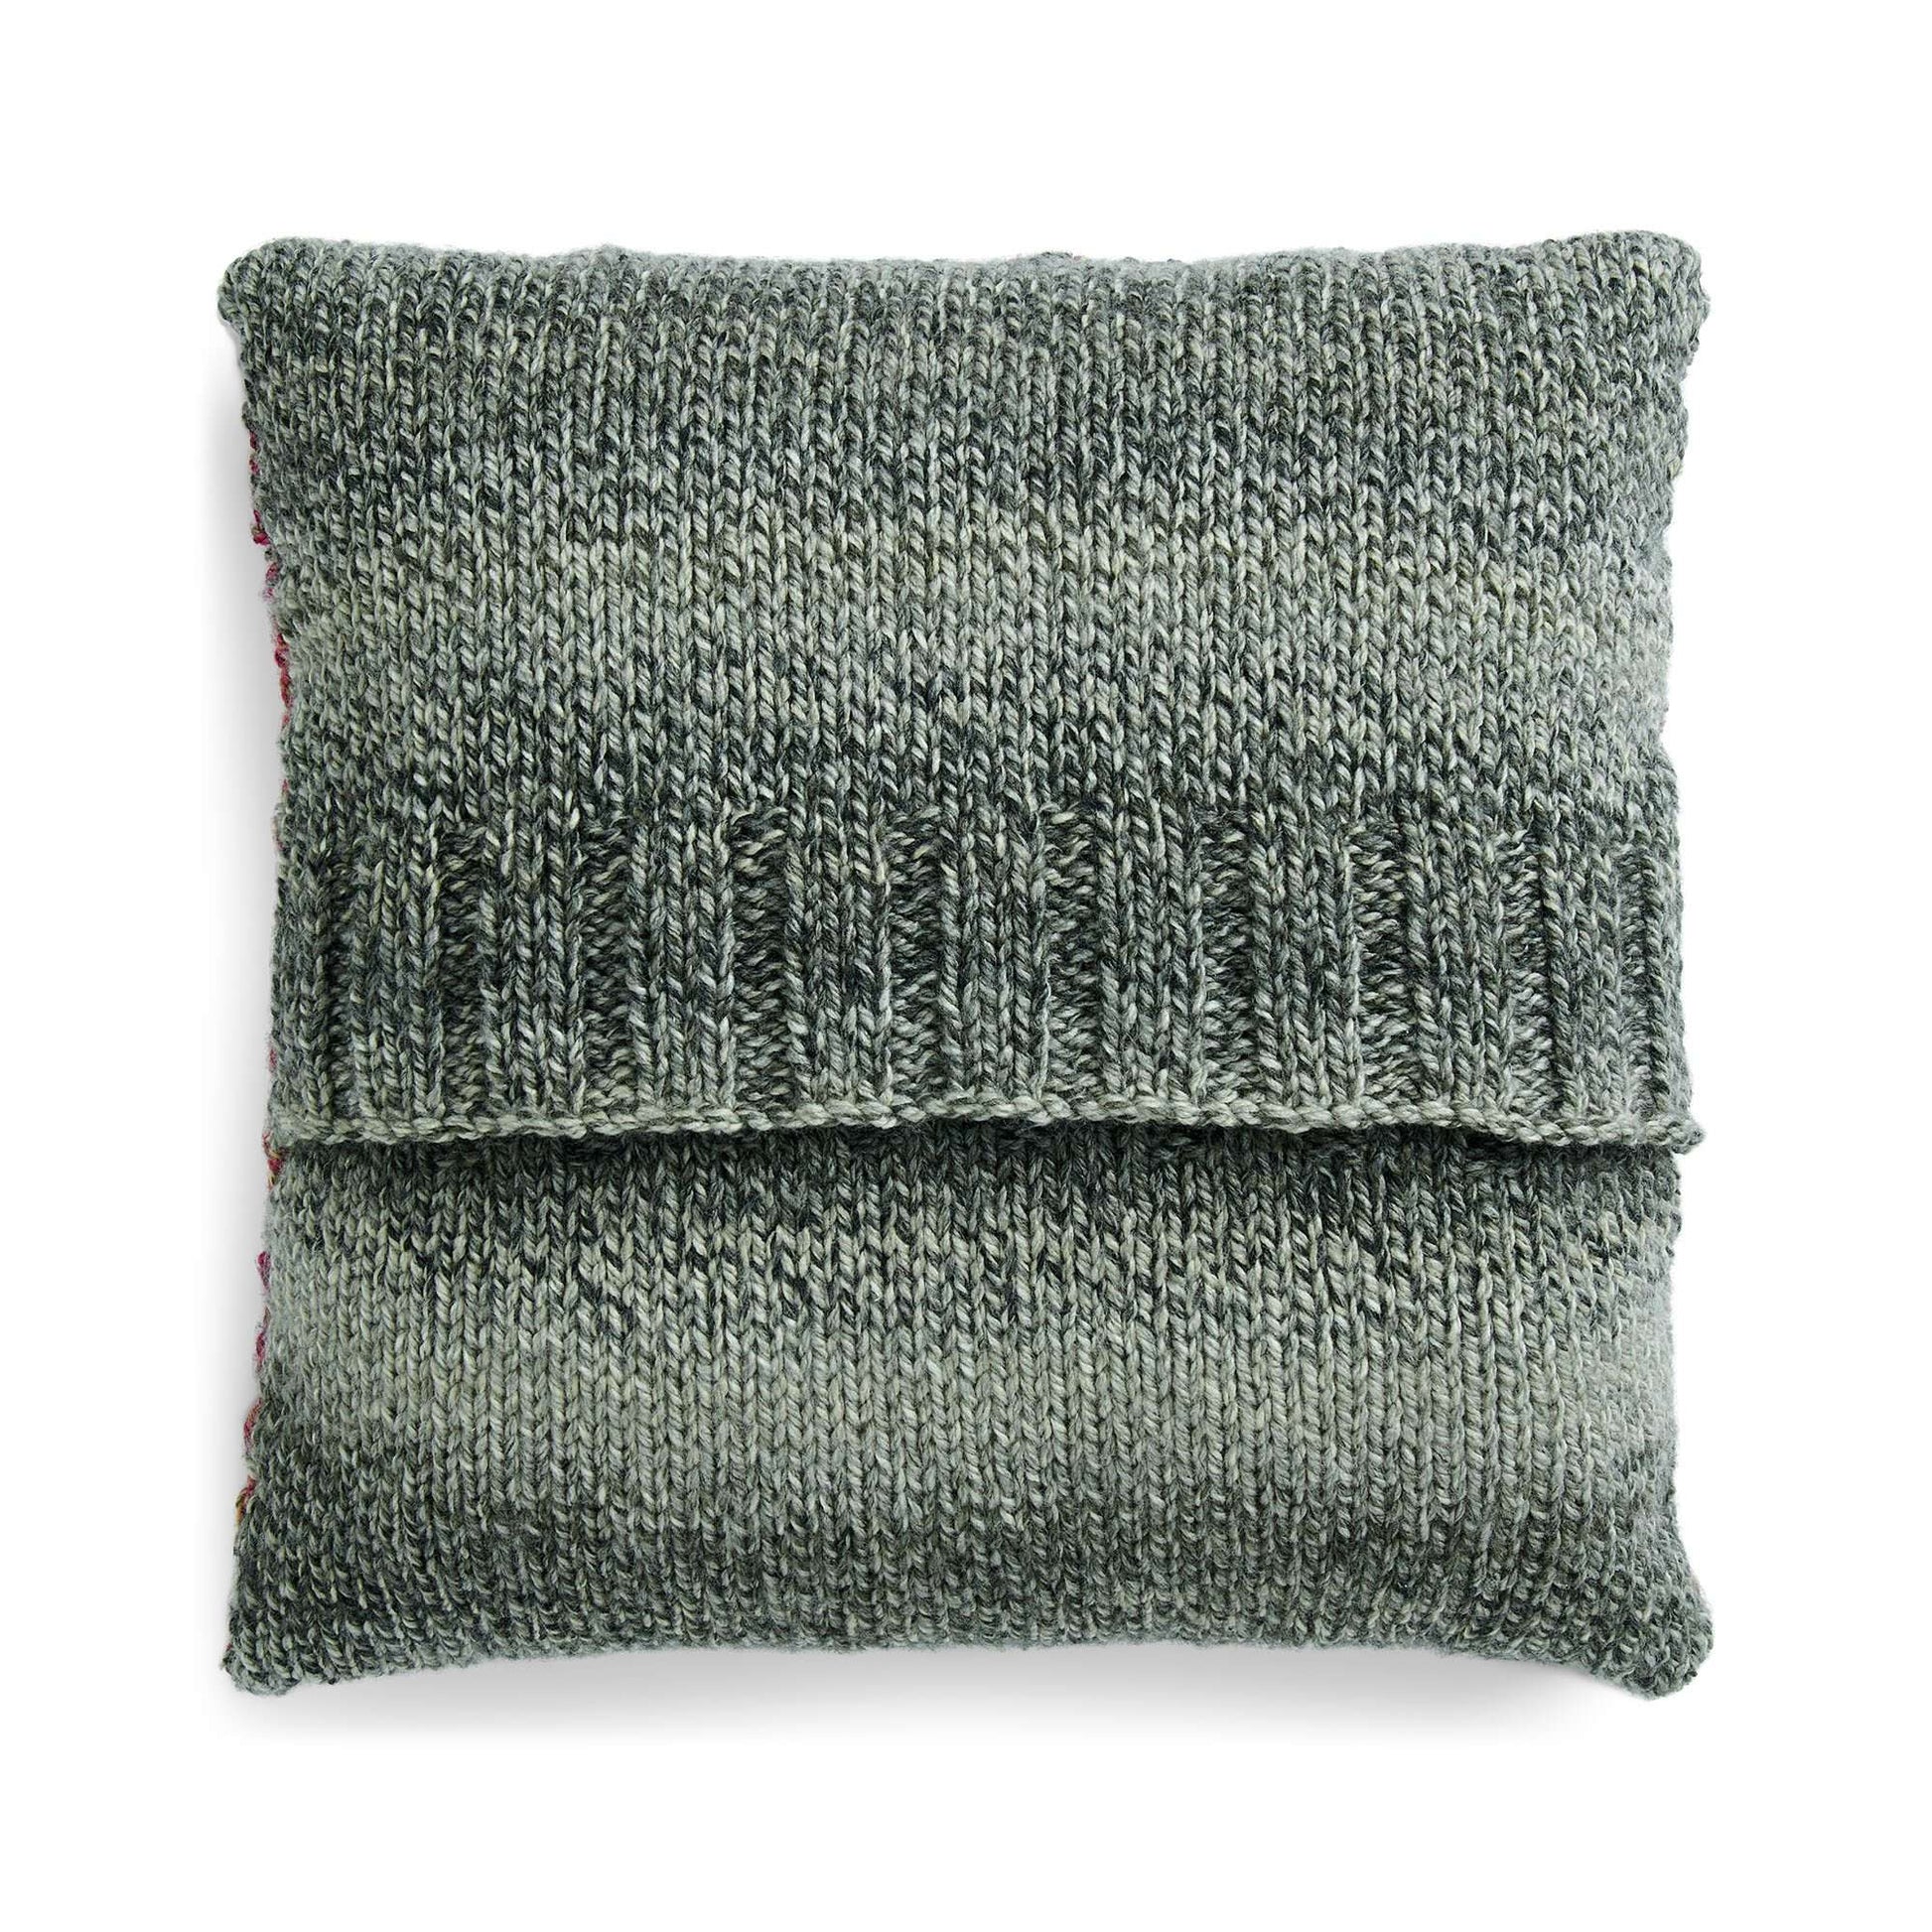 Free Caron Knit Lively Lattice Pillow Pattern